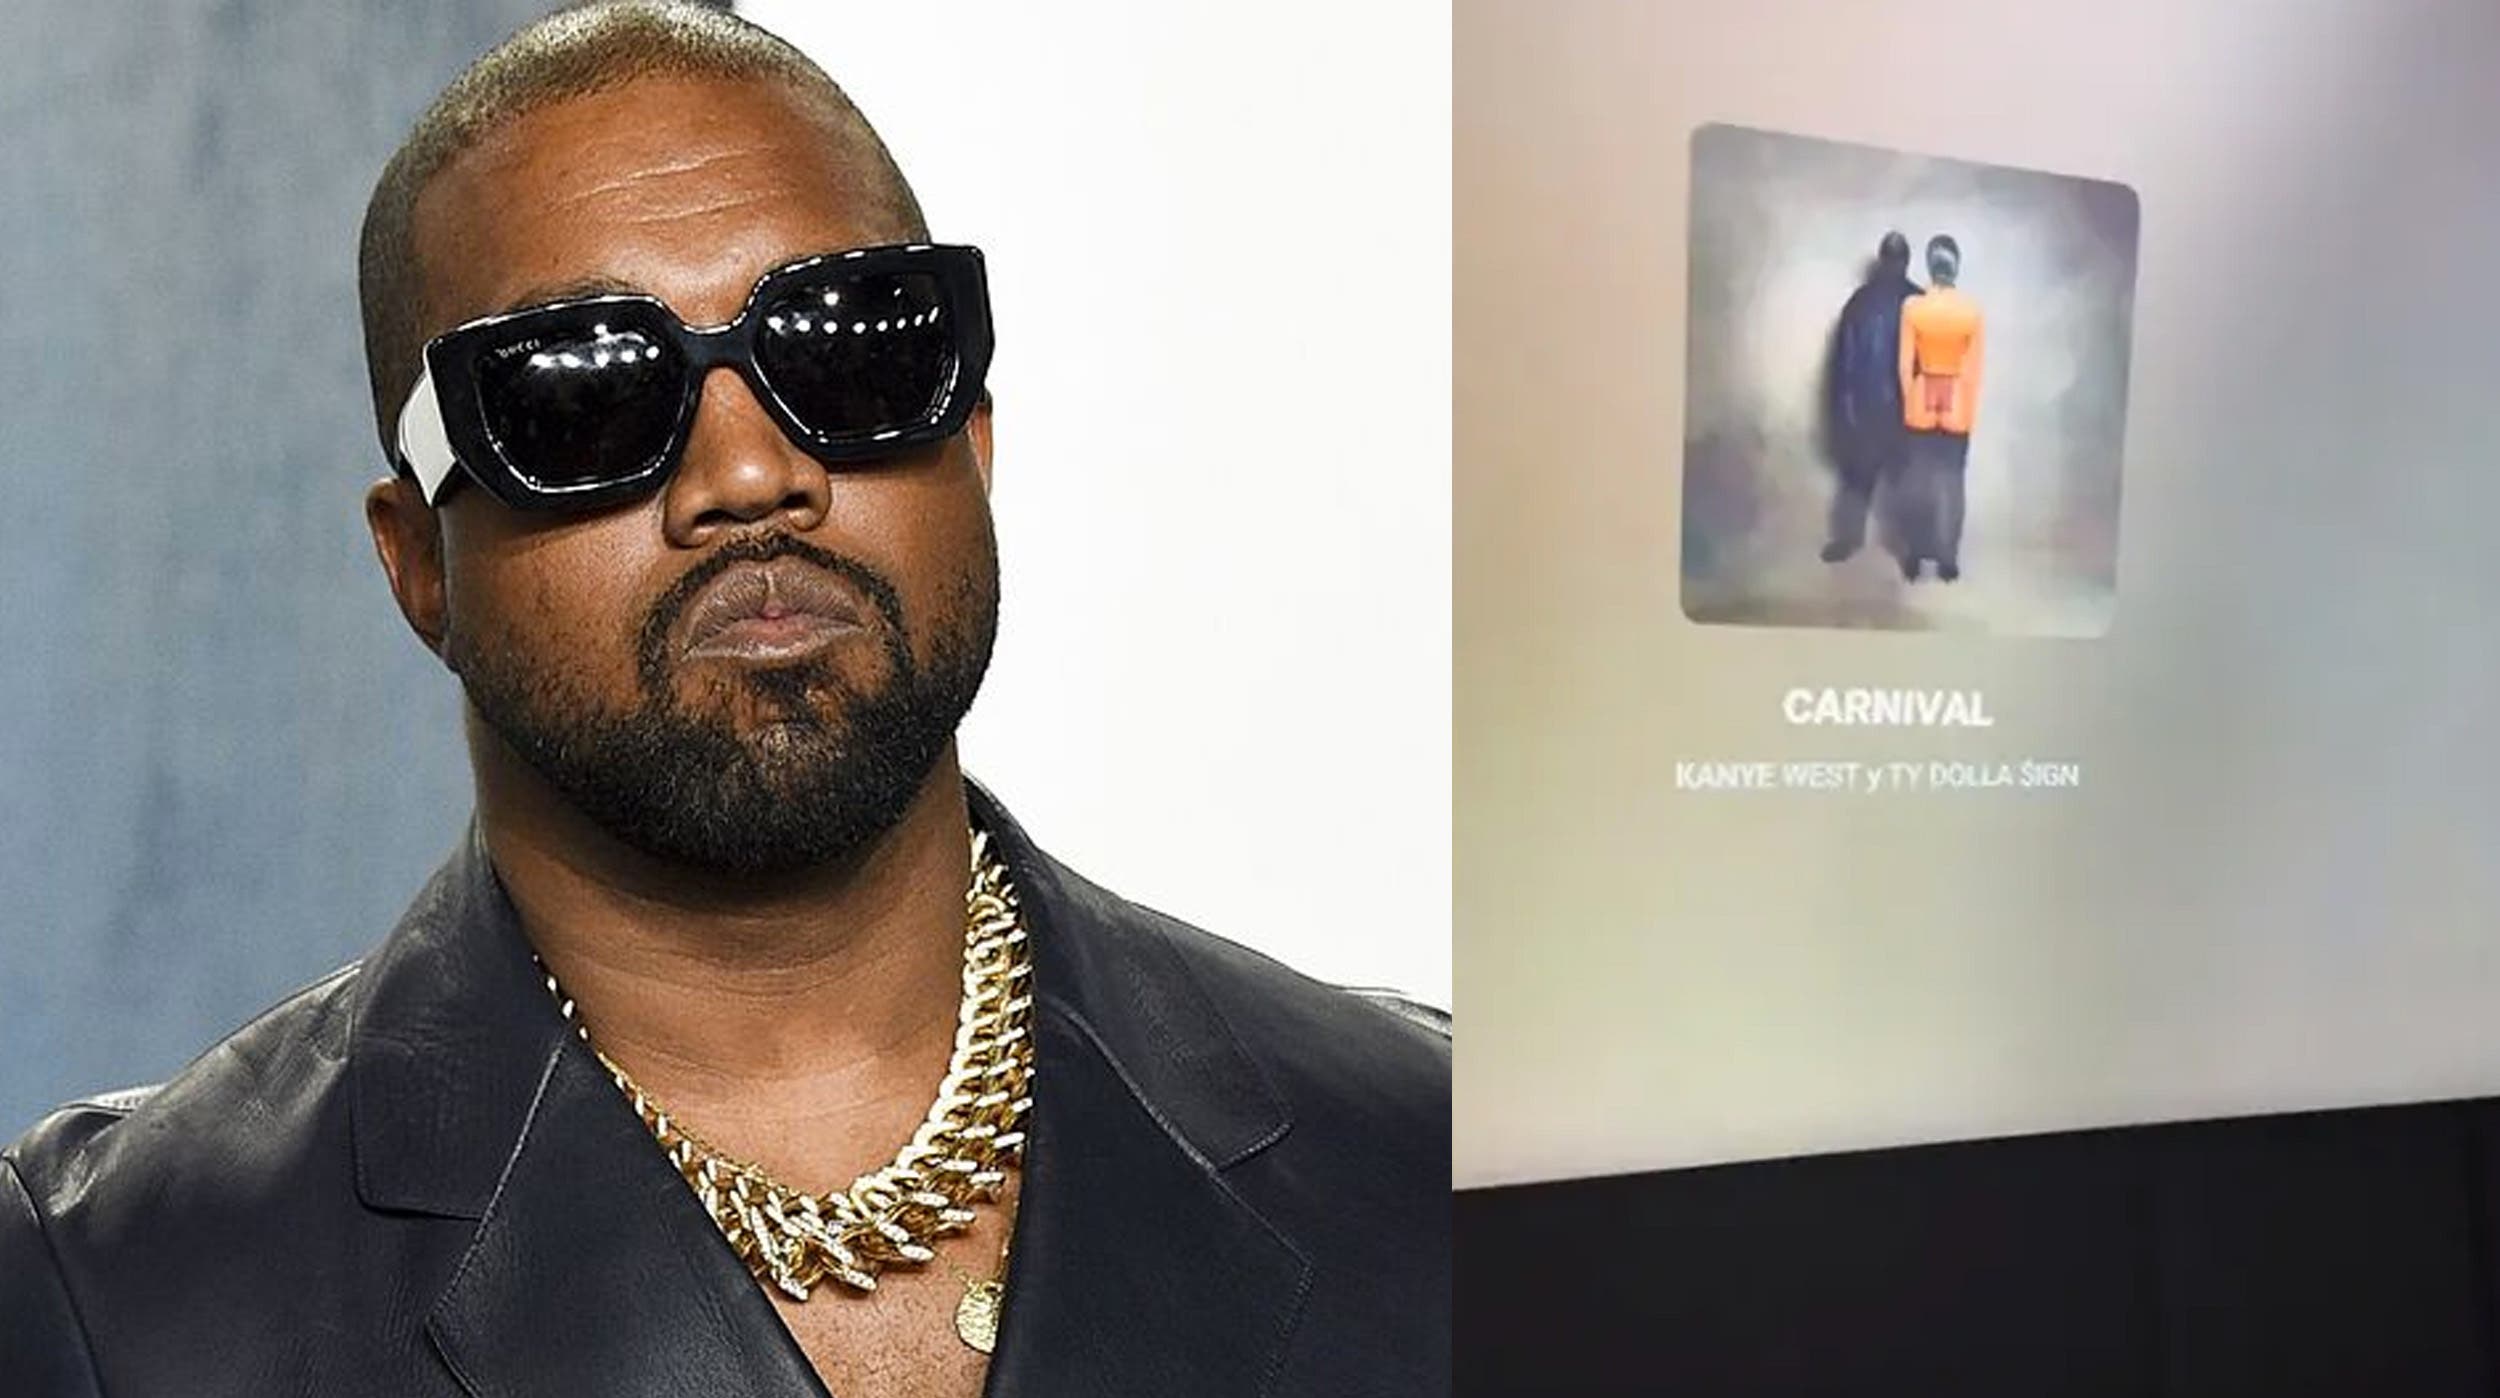 Fanático se vuelve viral tras ser sampleado por Kanye West en presentación